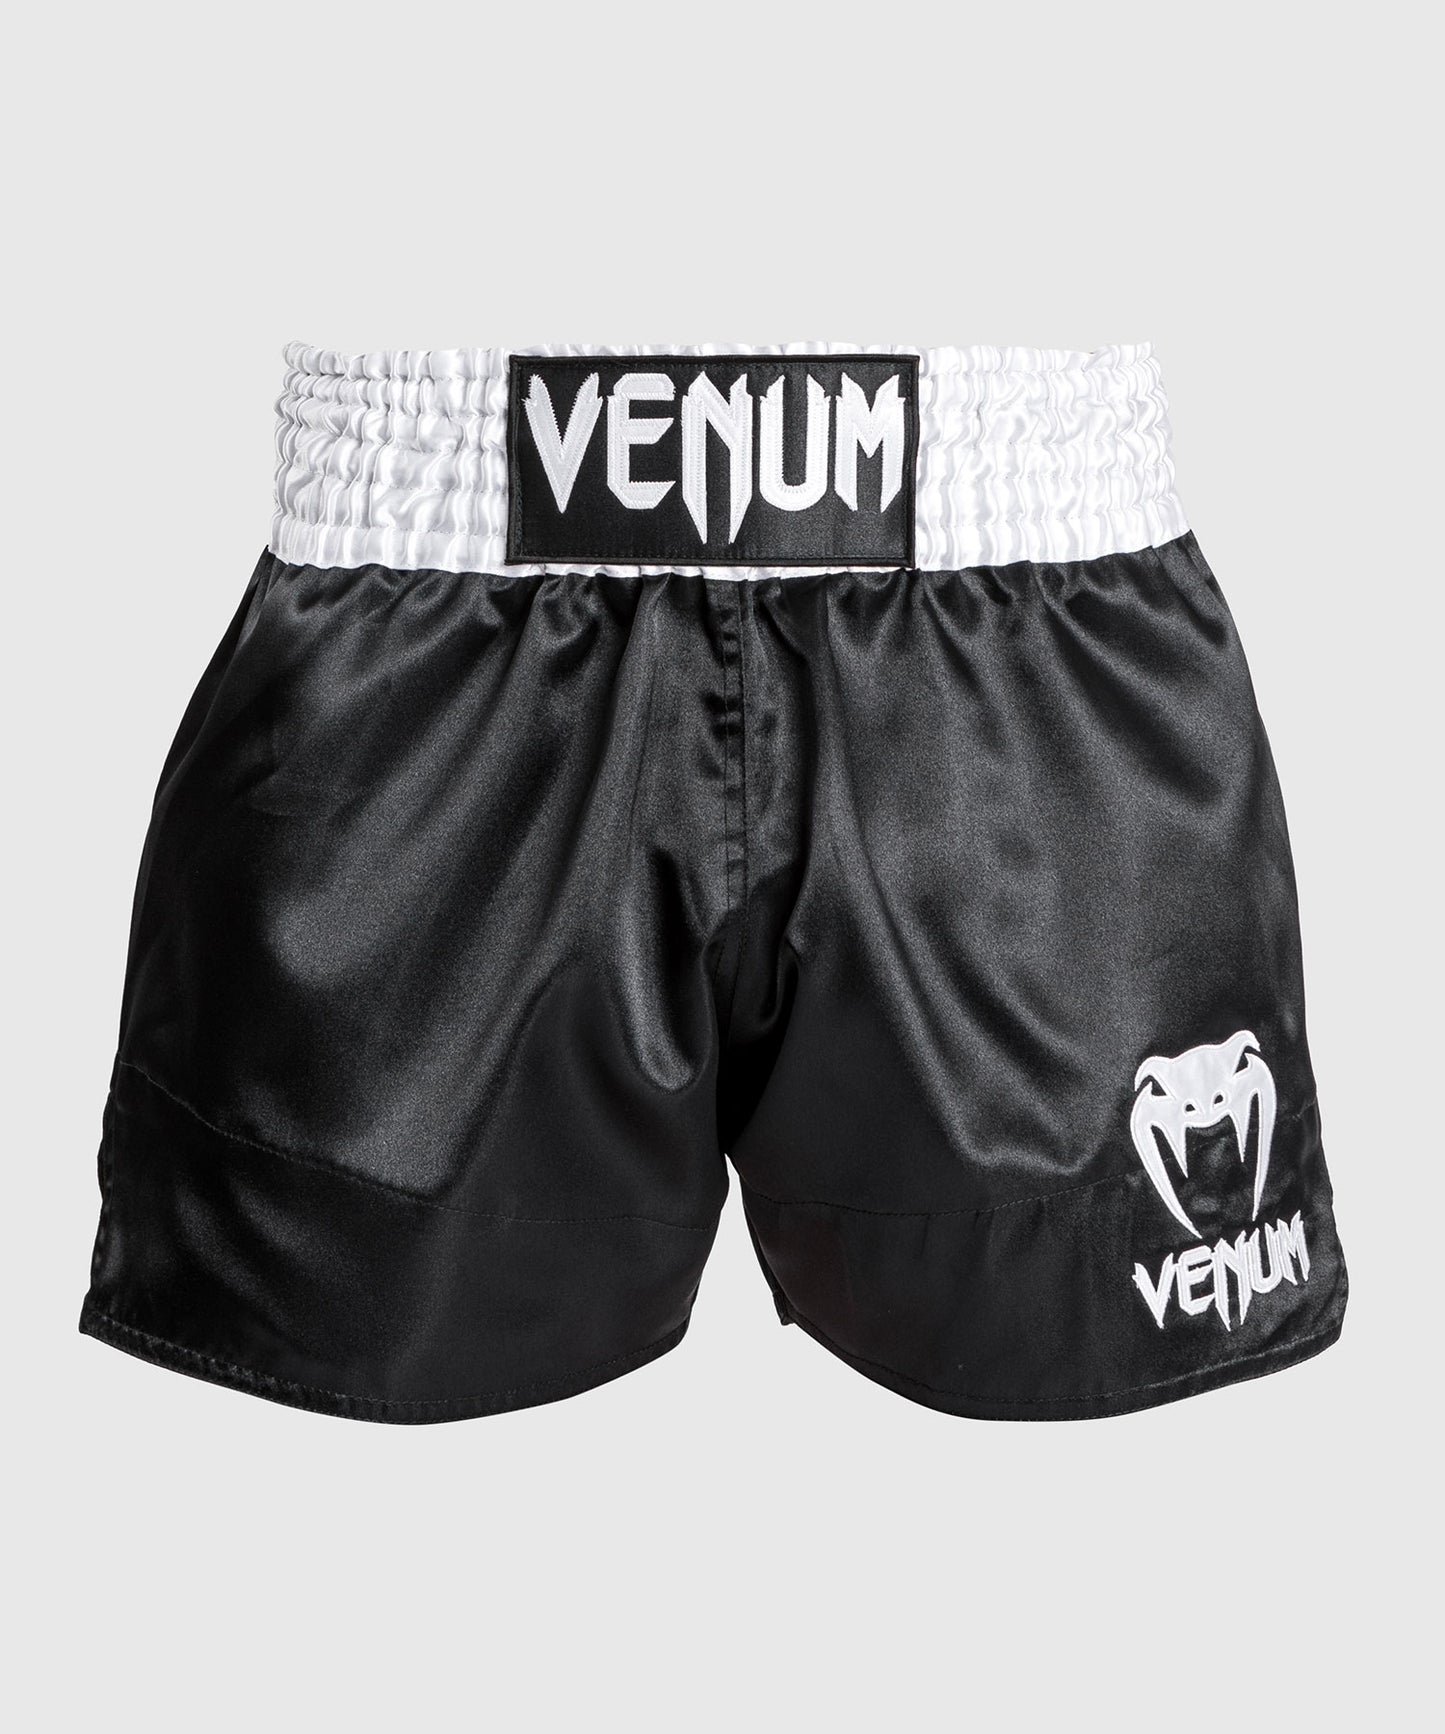 Venum Classic - Muay Thai Short Wit/Zwart/Wit